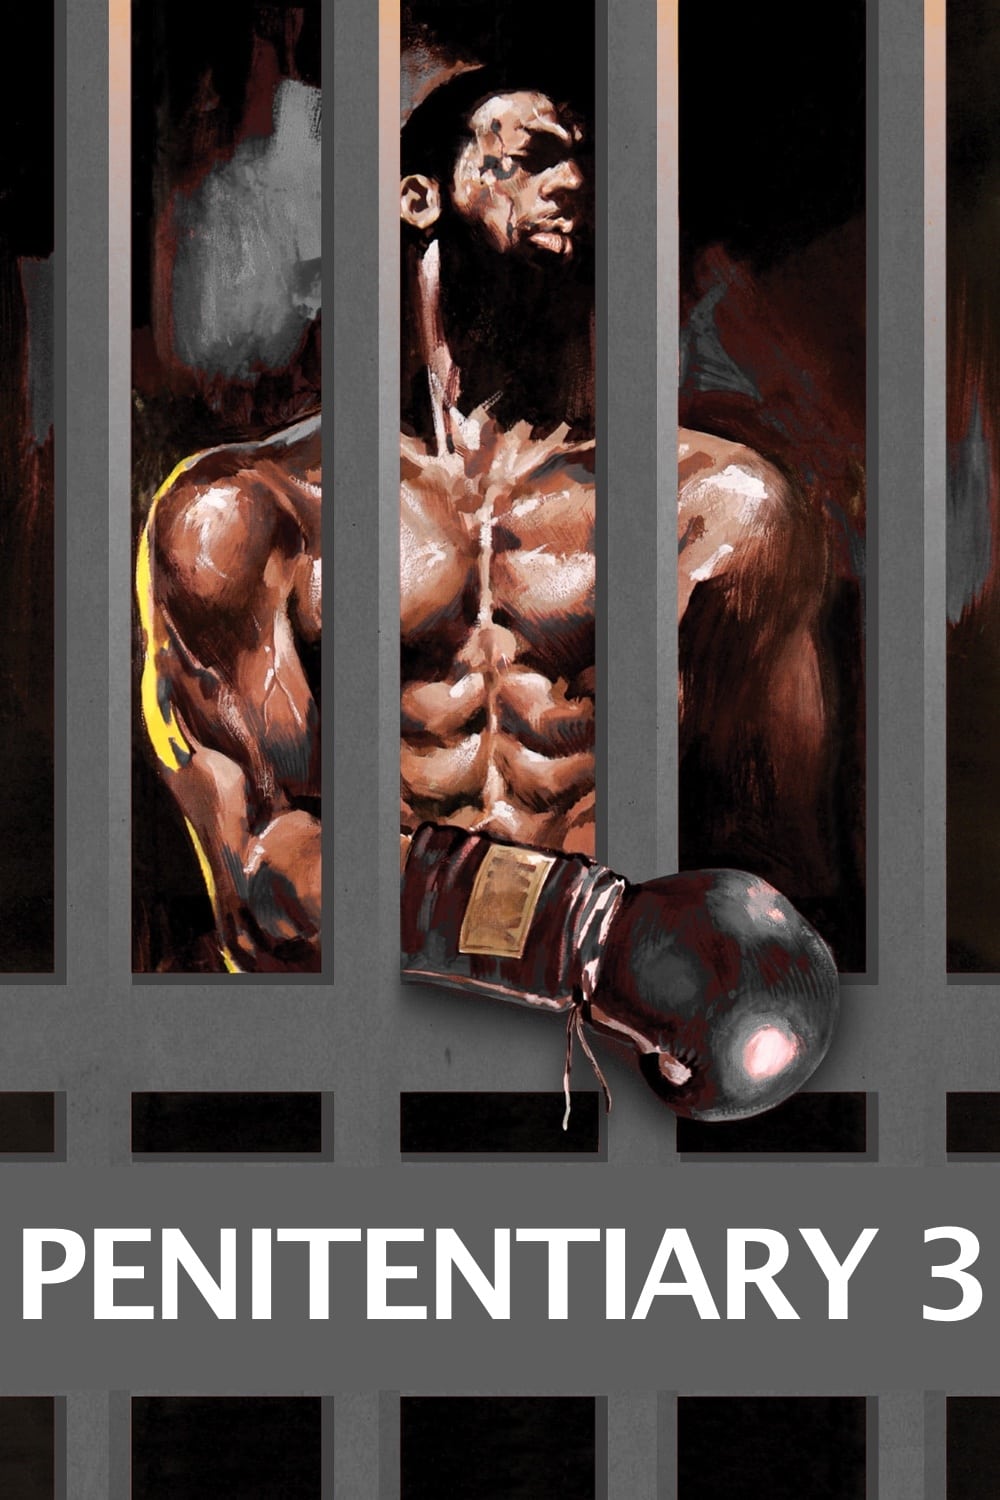 Penitentiary III